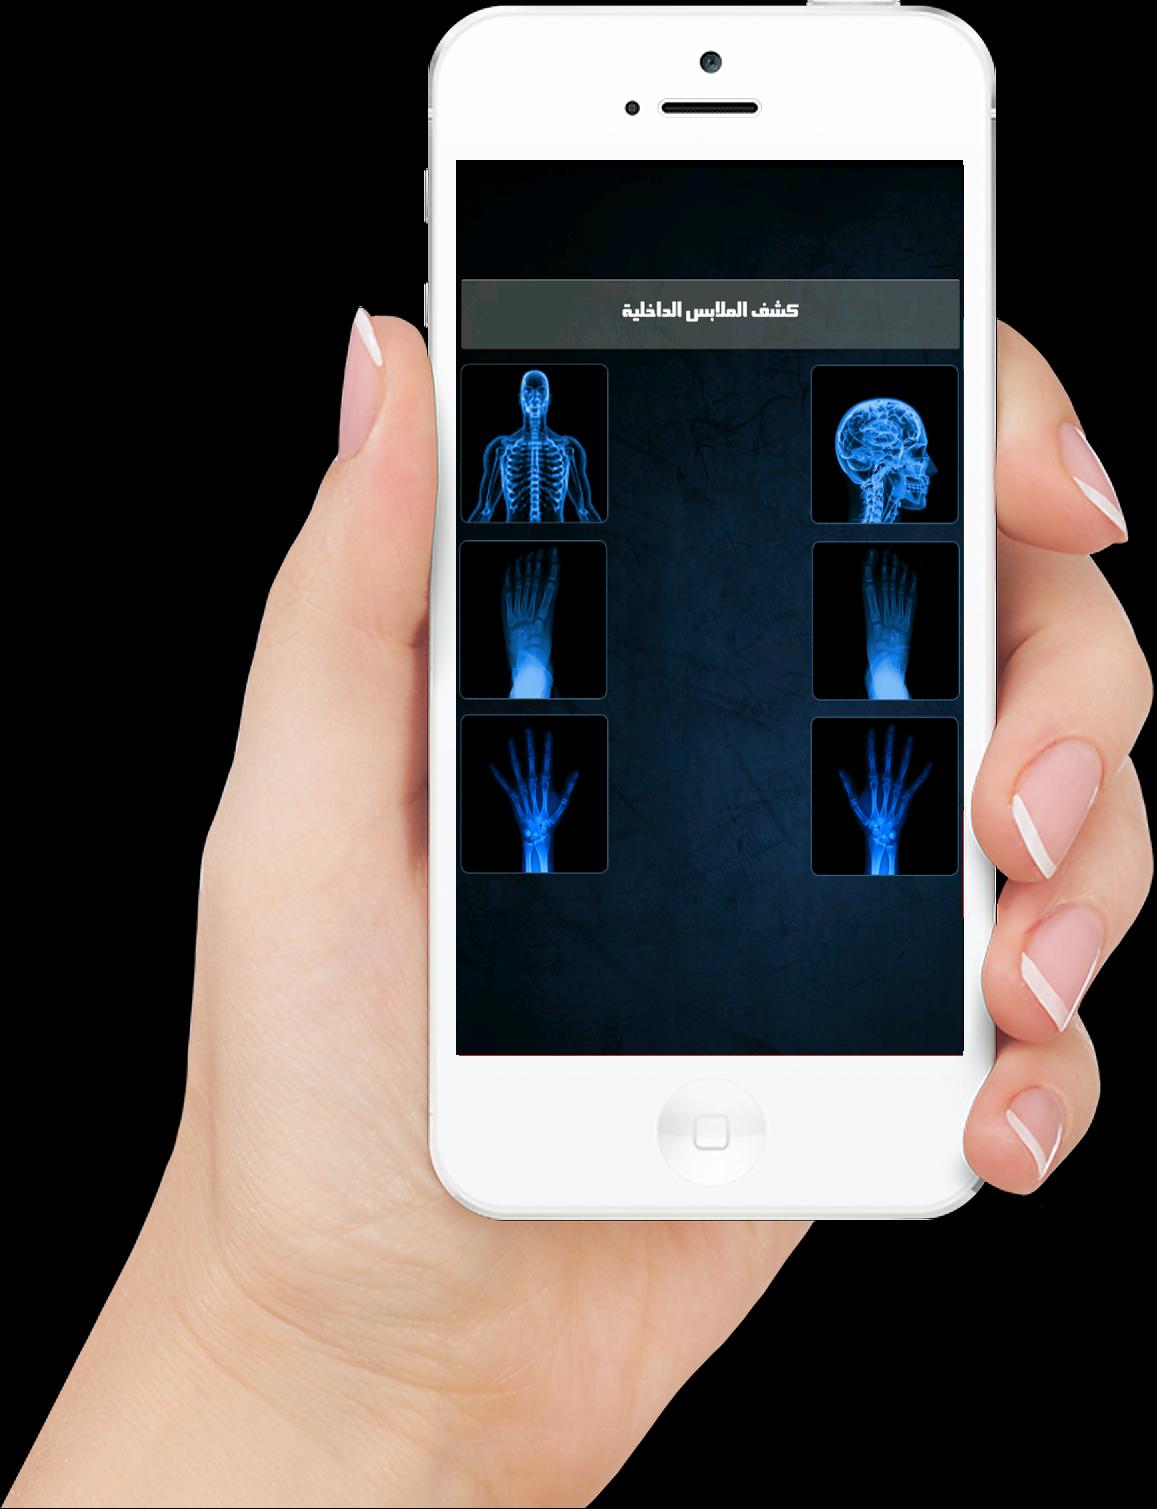 Android용 كشف الملابس الداخلية x-ray scanner APK 다운로드